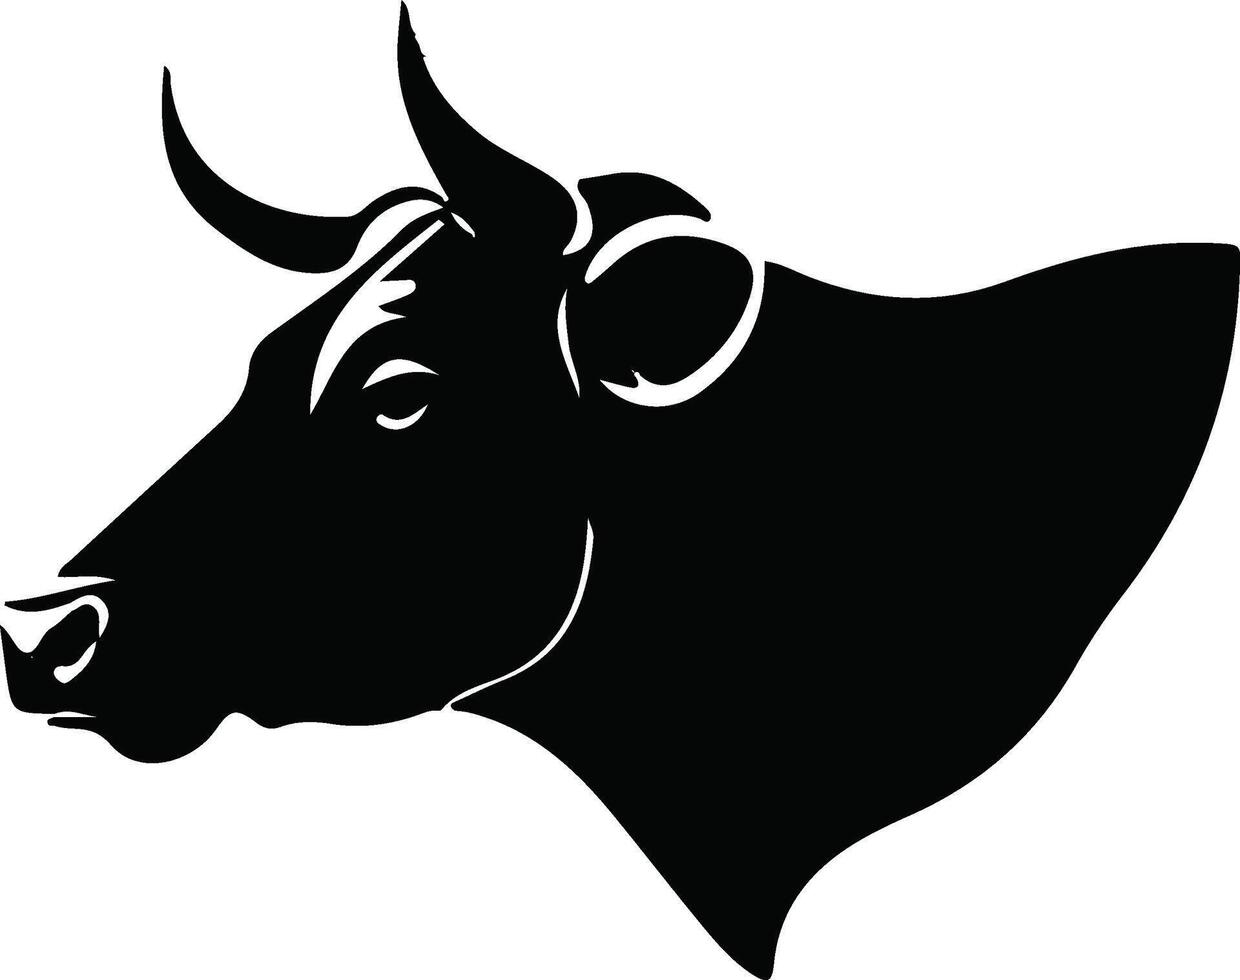 cow head silhouette vector